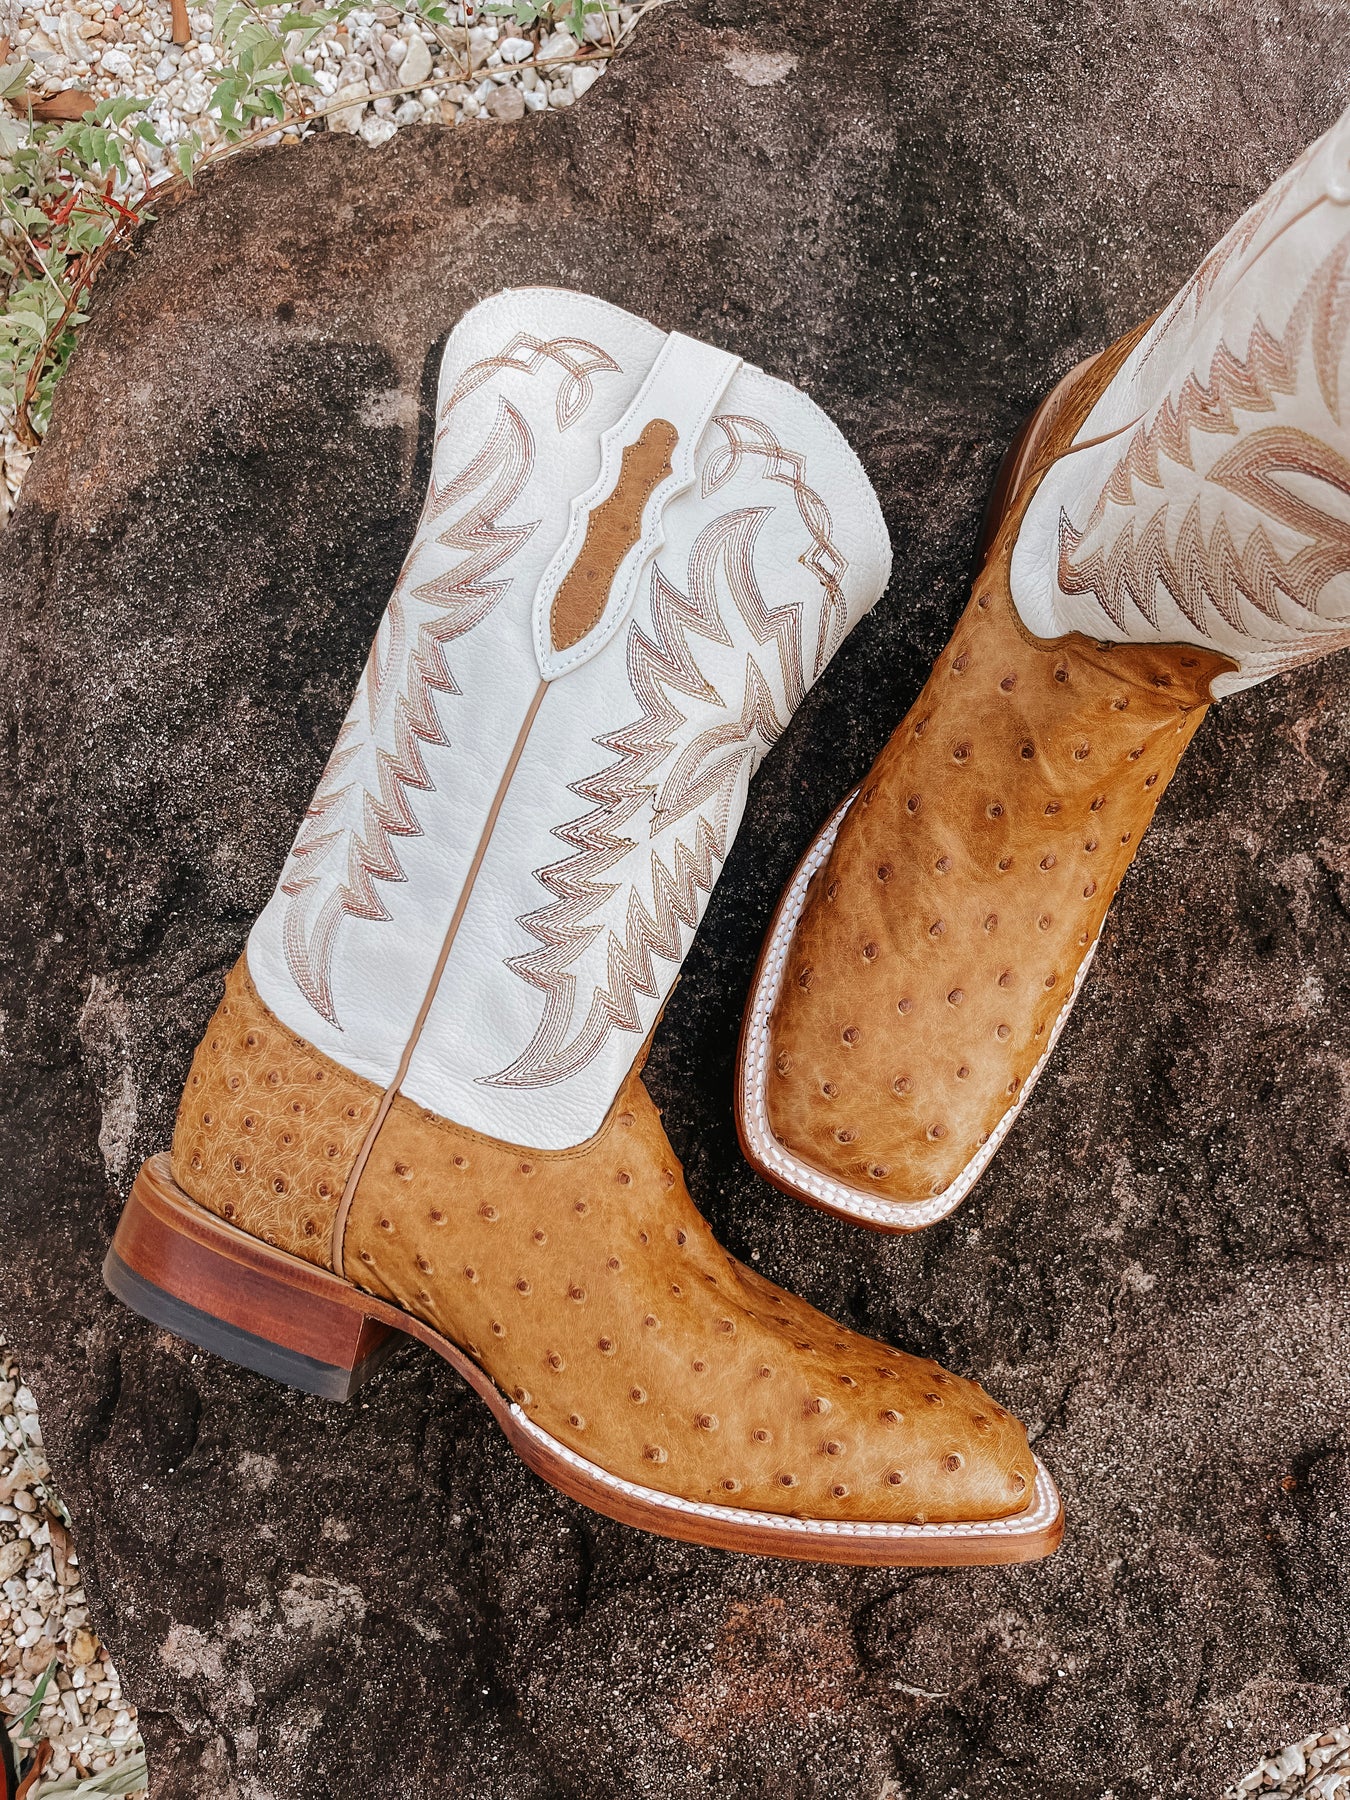 Justin Men's Cognac Ostrich Western Boots - Wide Square Toe